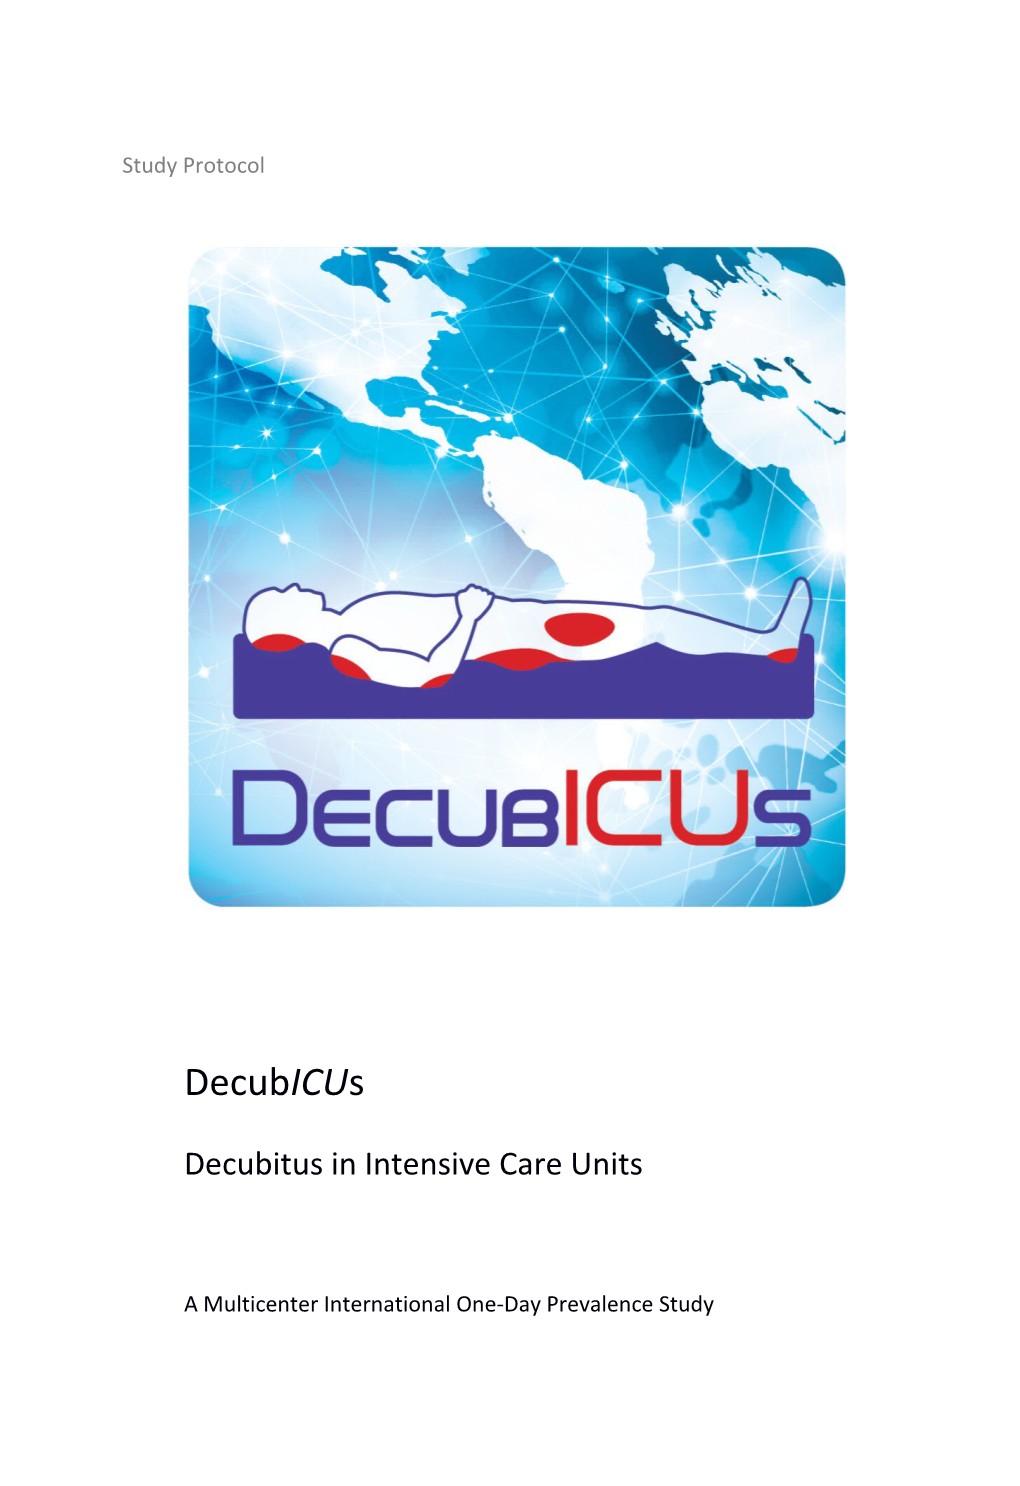 Decubicus Study Protocol